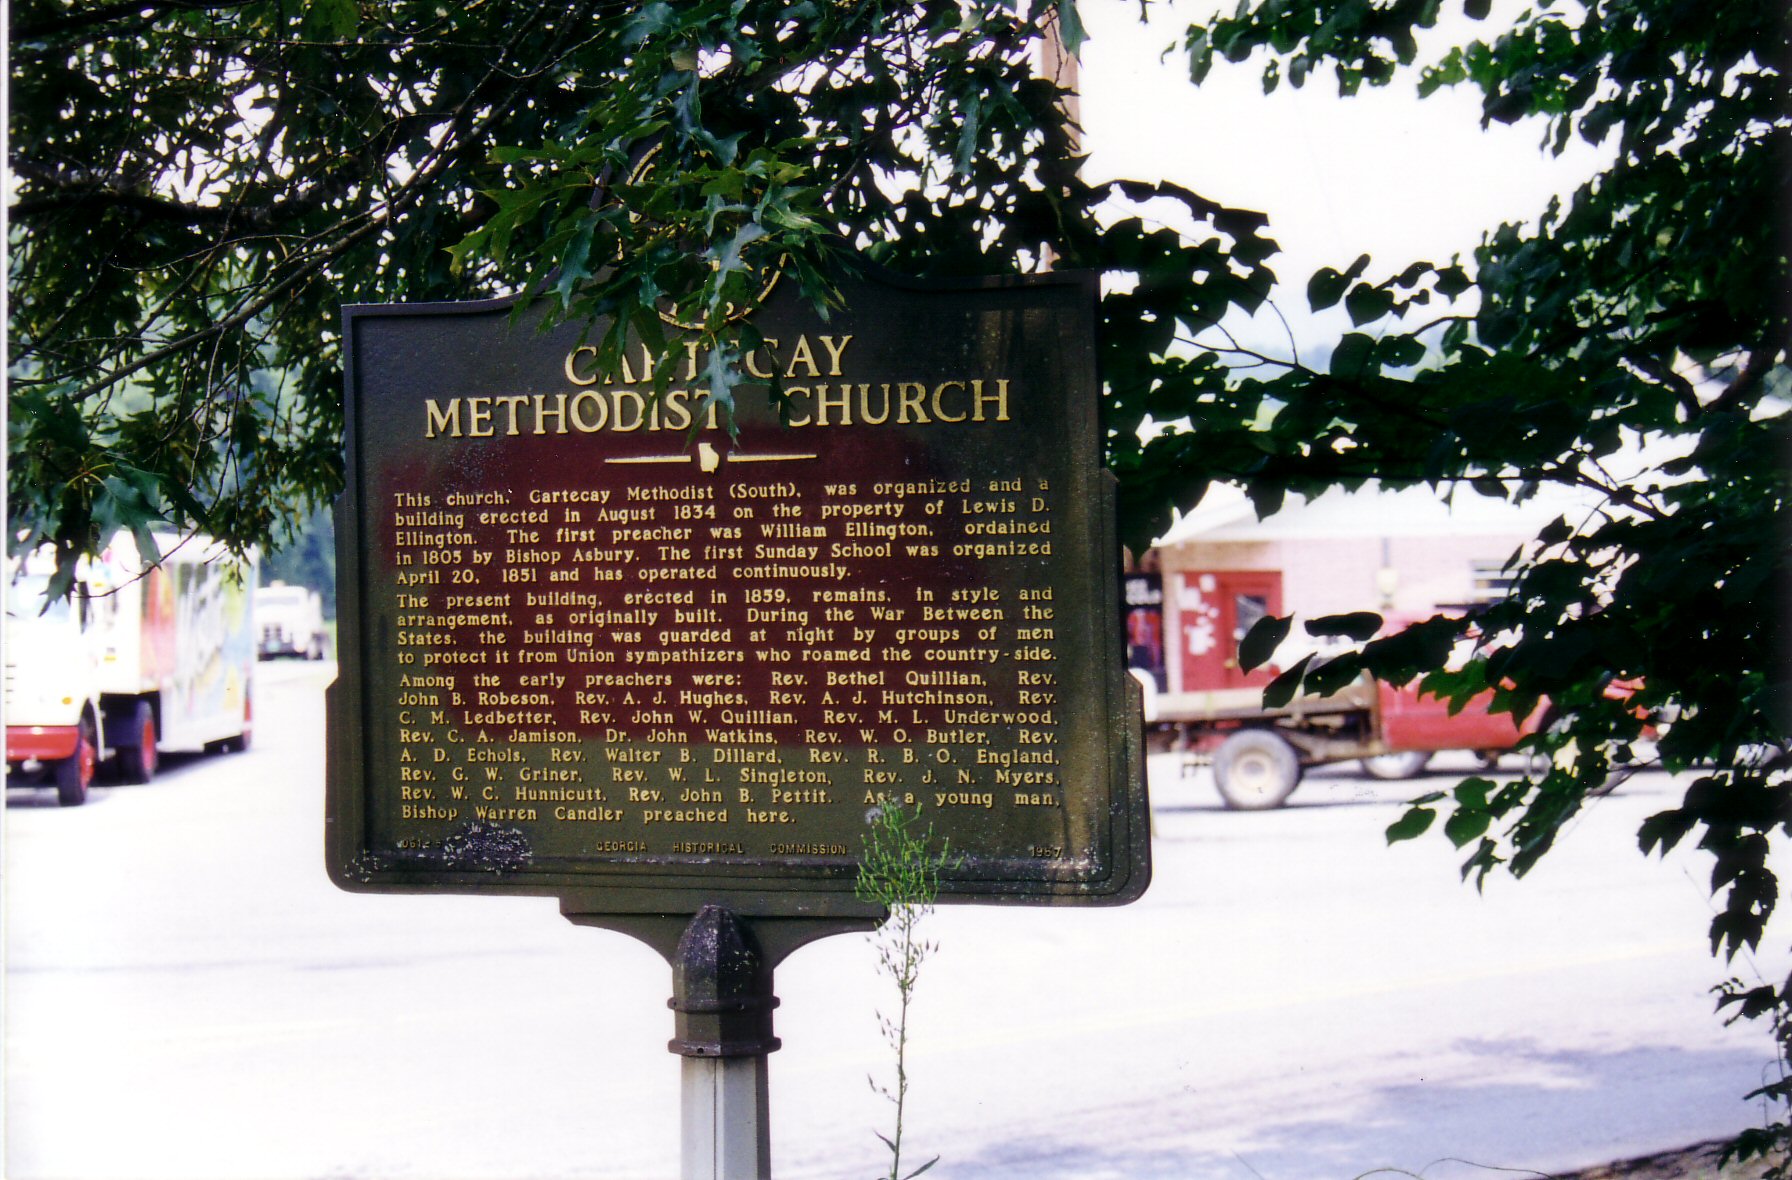 Cartecay Methodist Church Historical Marker